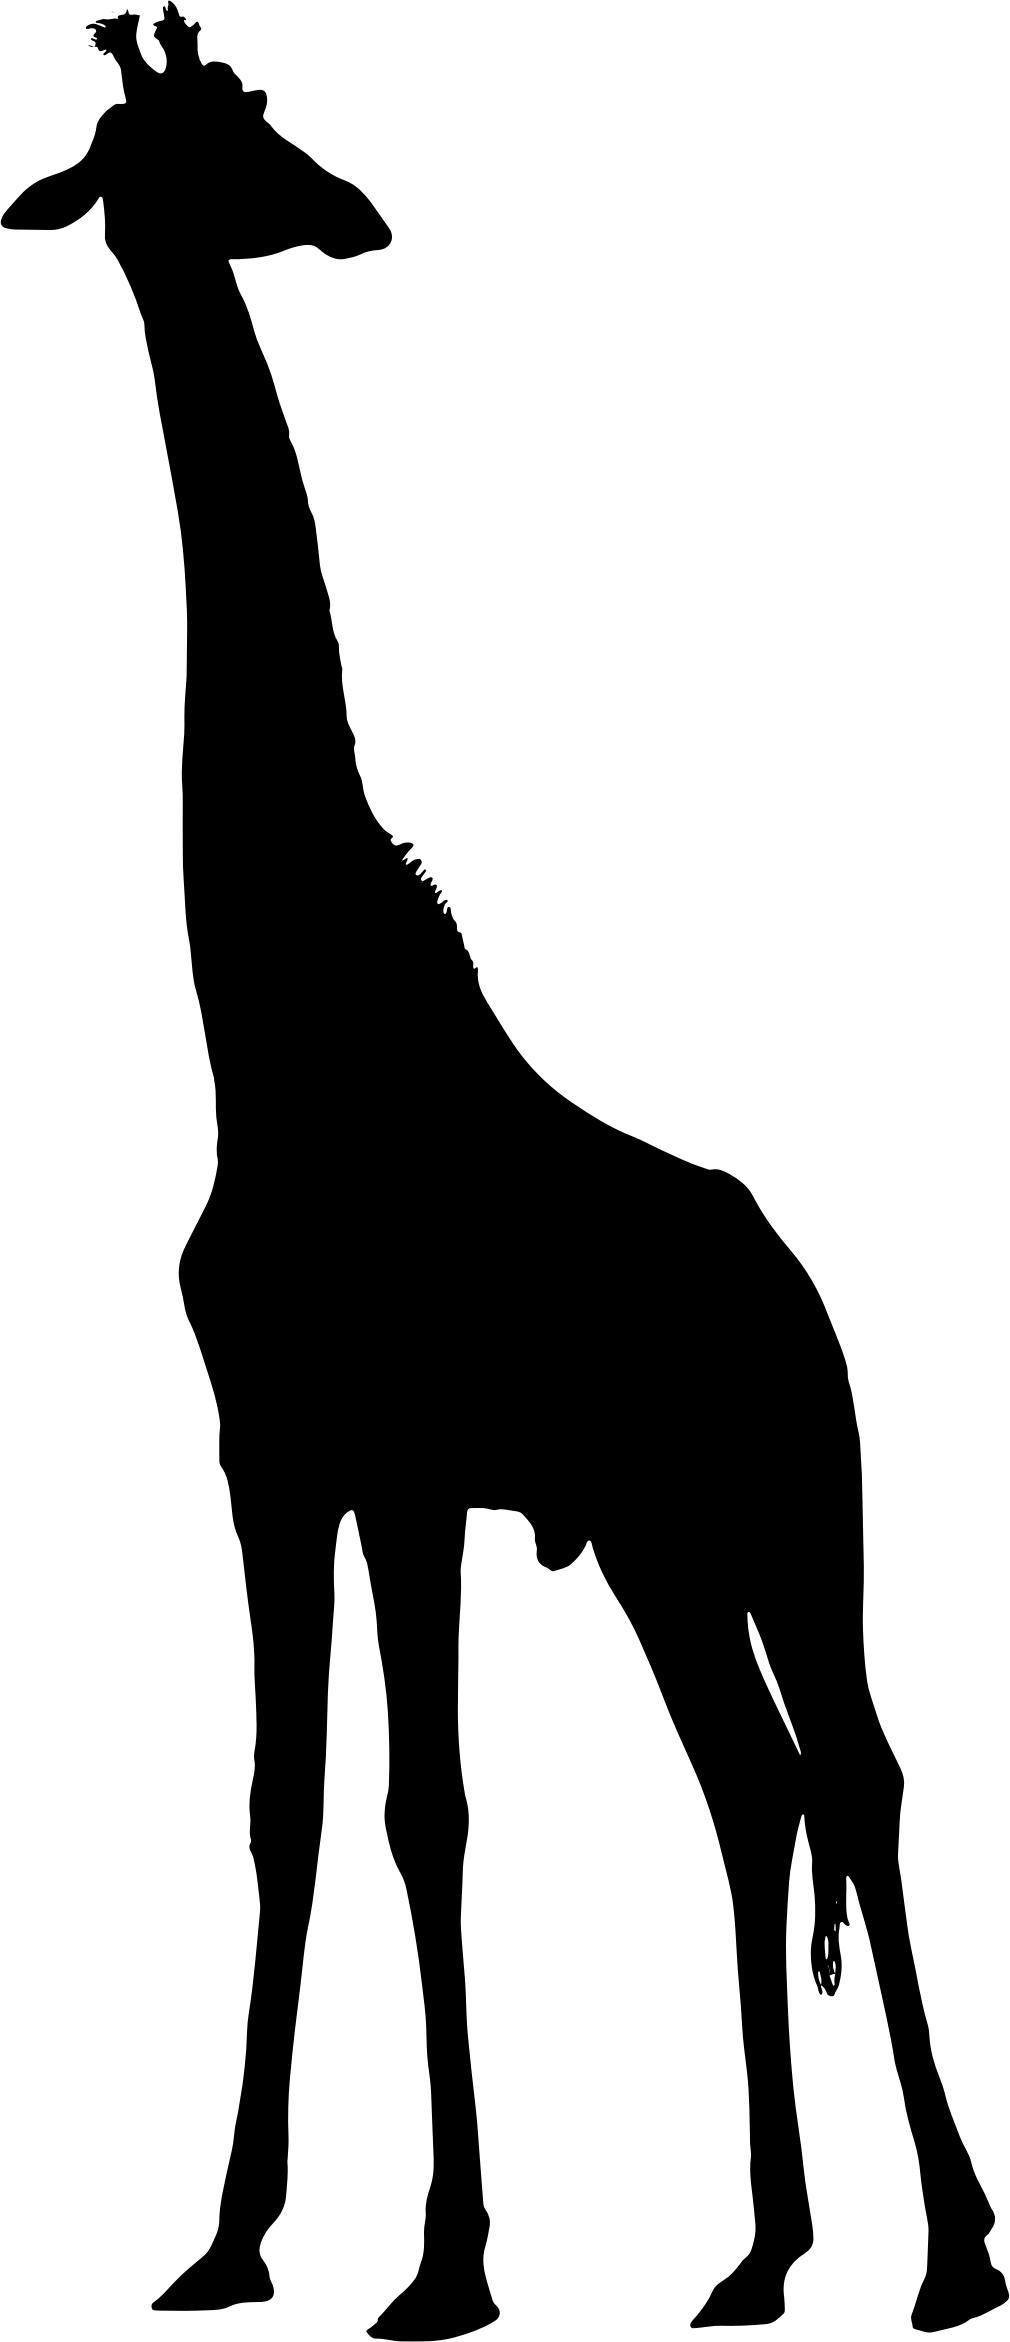 Giraffe Silhouette png transparent